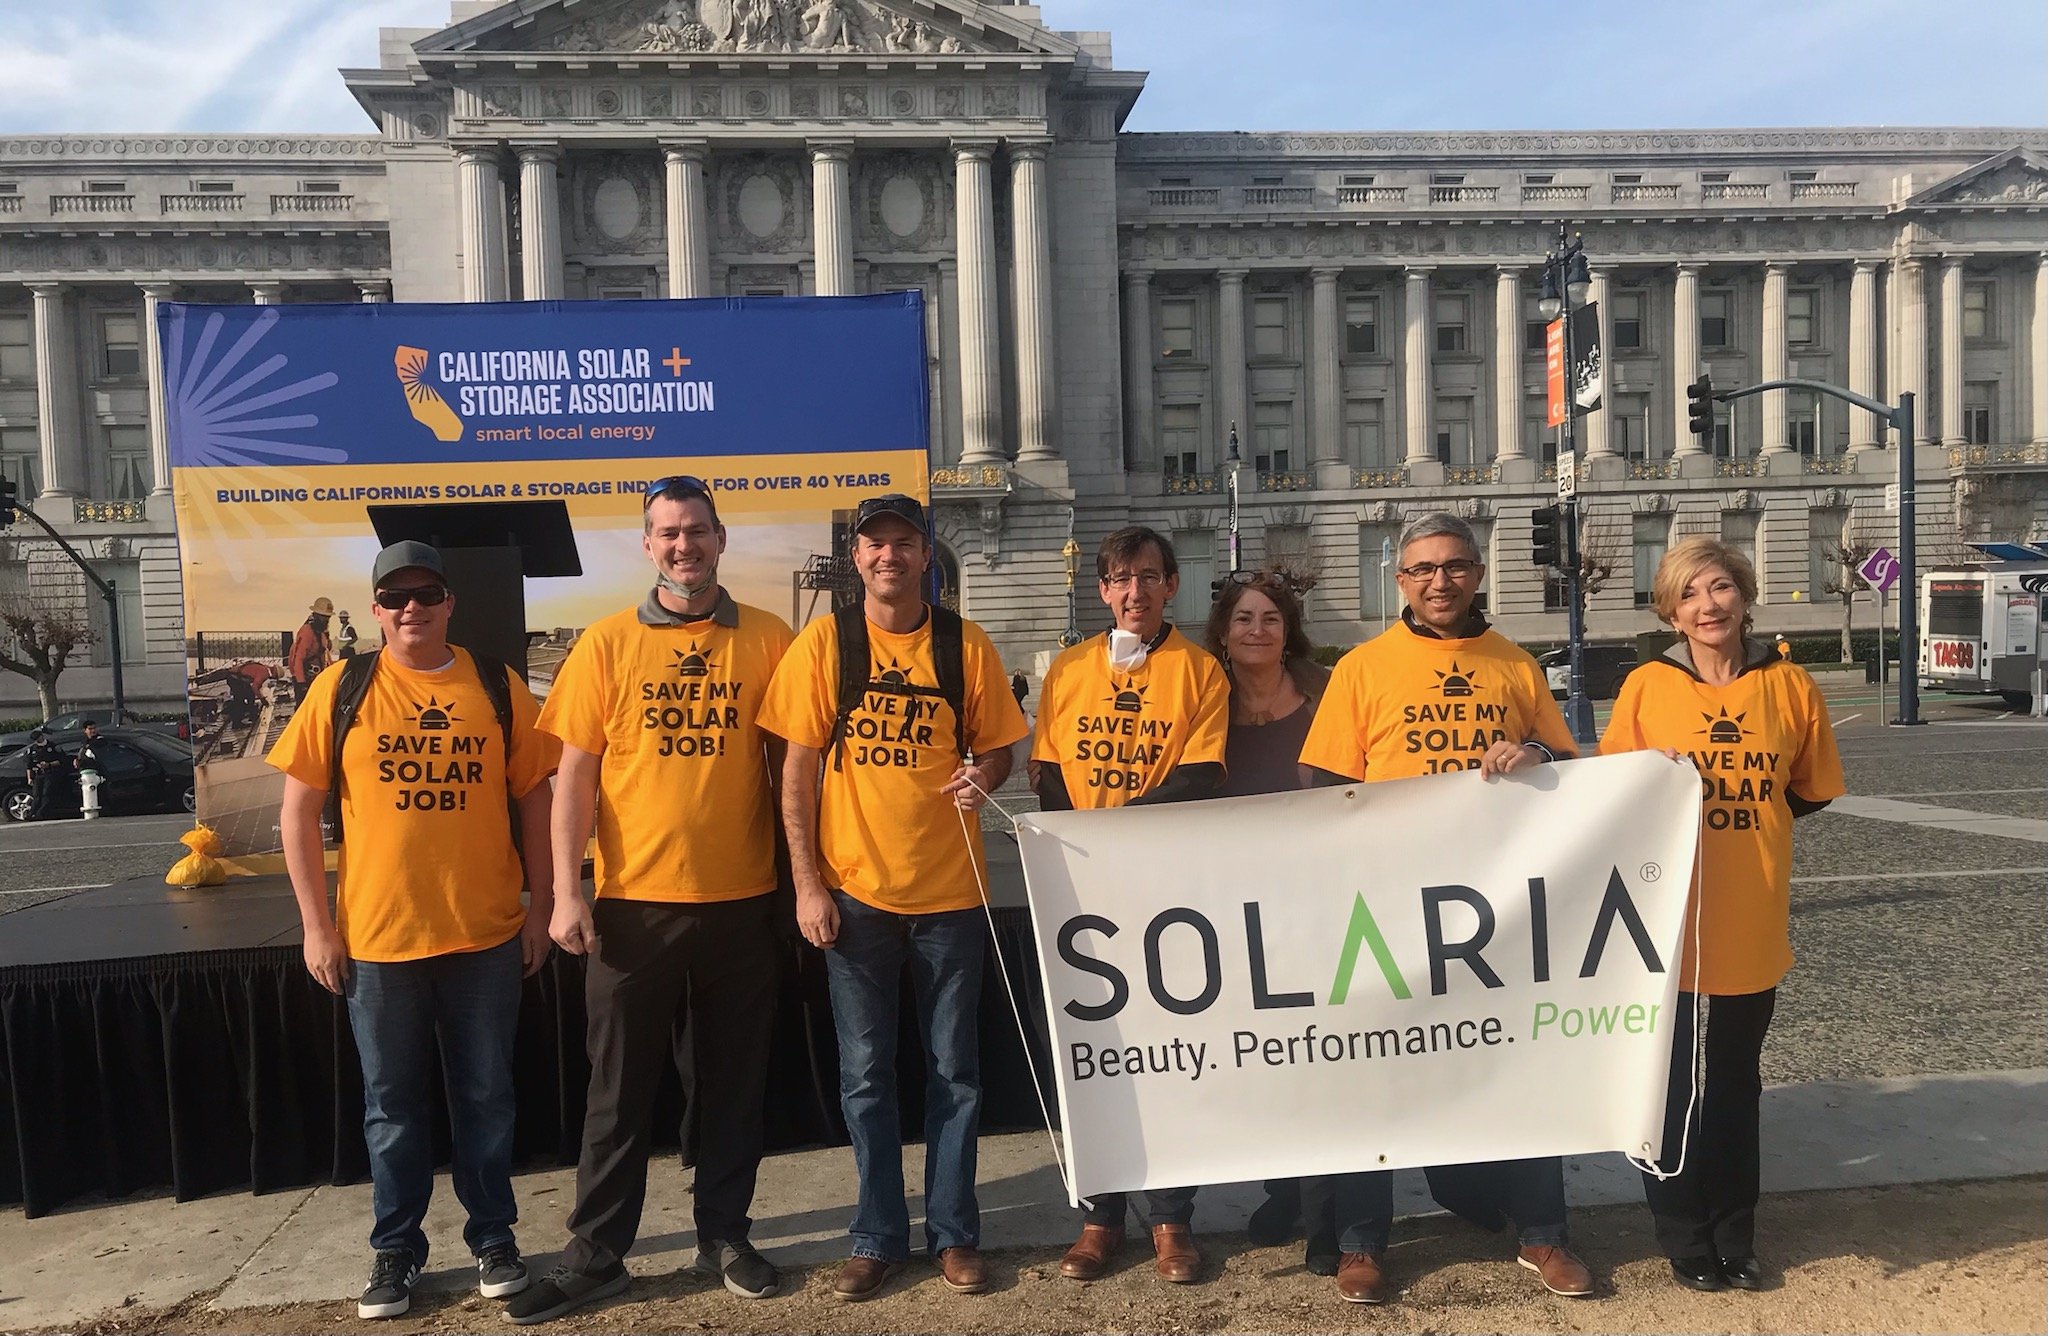  Solaria strong in San Francisco (L to R): Chris Kissinger, Patrick Lynch, Aaron Hesterman, Tom Thompson, Susan DeVico, Vikas Desai, Stri Zulch, Howard Wenger 